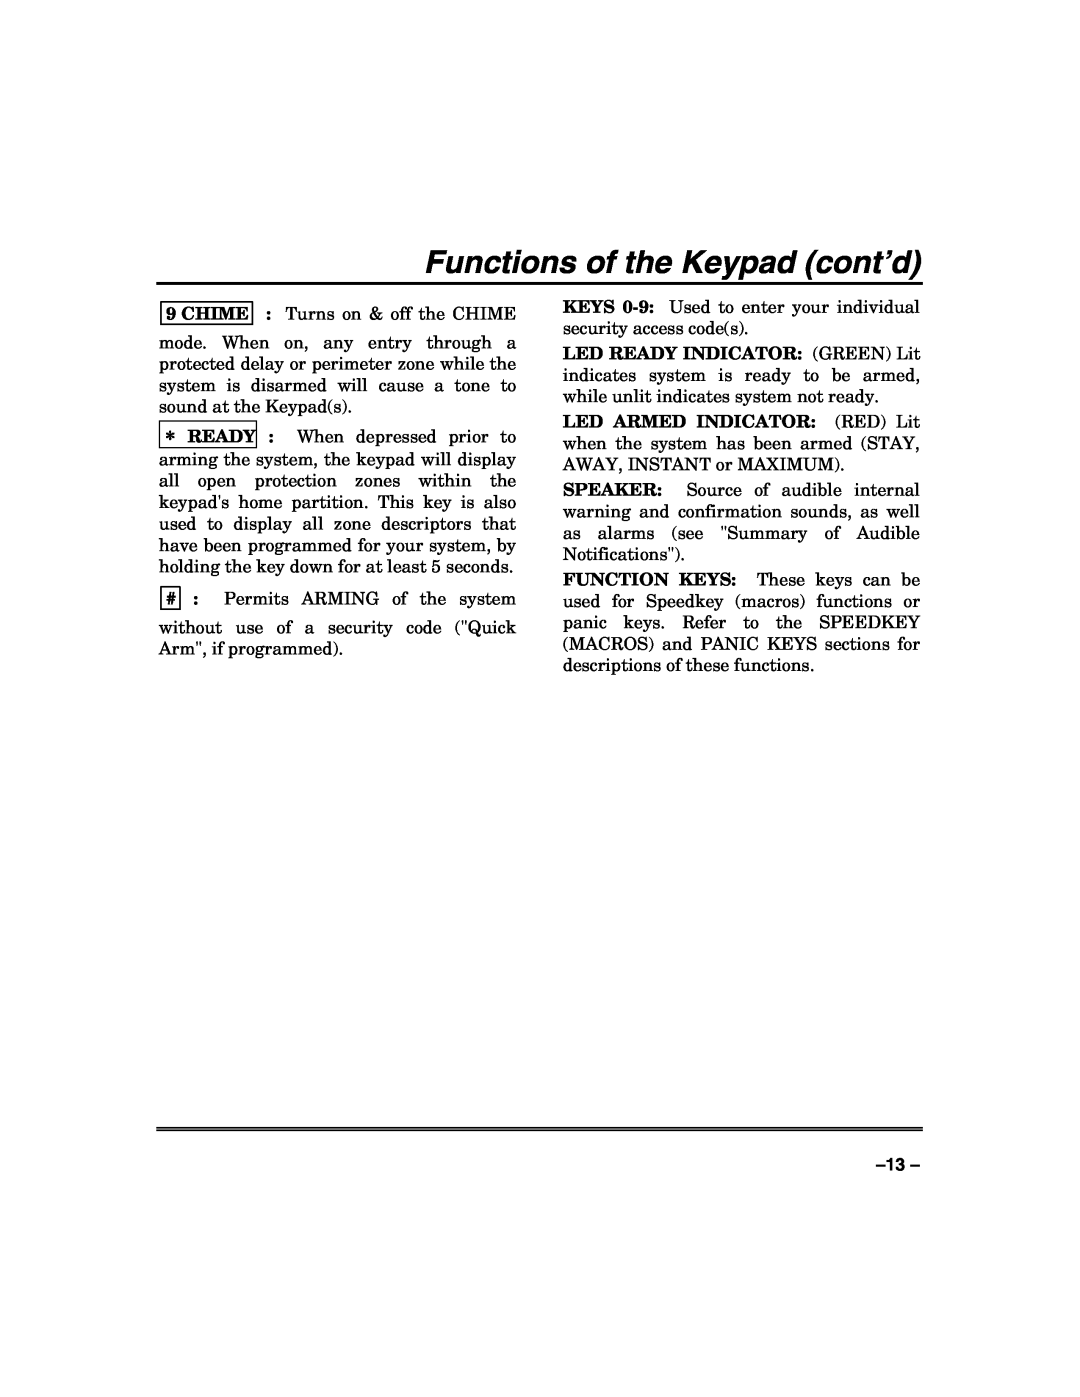 Honeywell VISTA128BPT, VISTA250BPT, 128BPTSIA manual Functions of the Keypad cont’d 